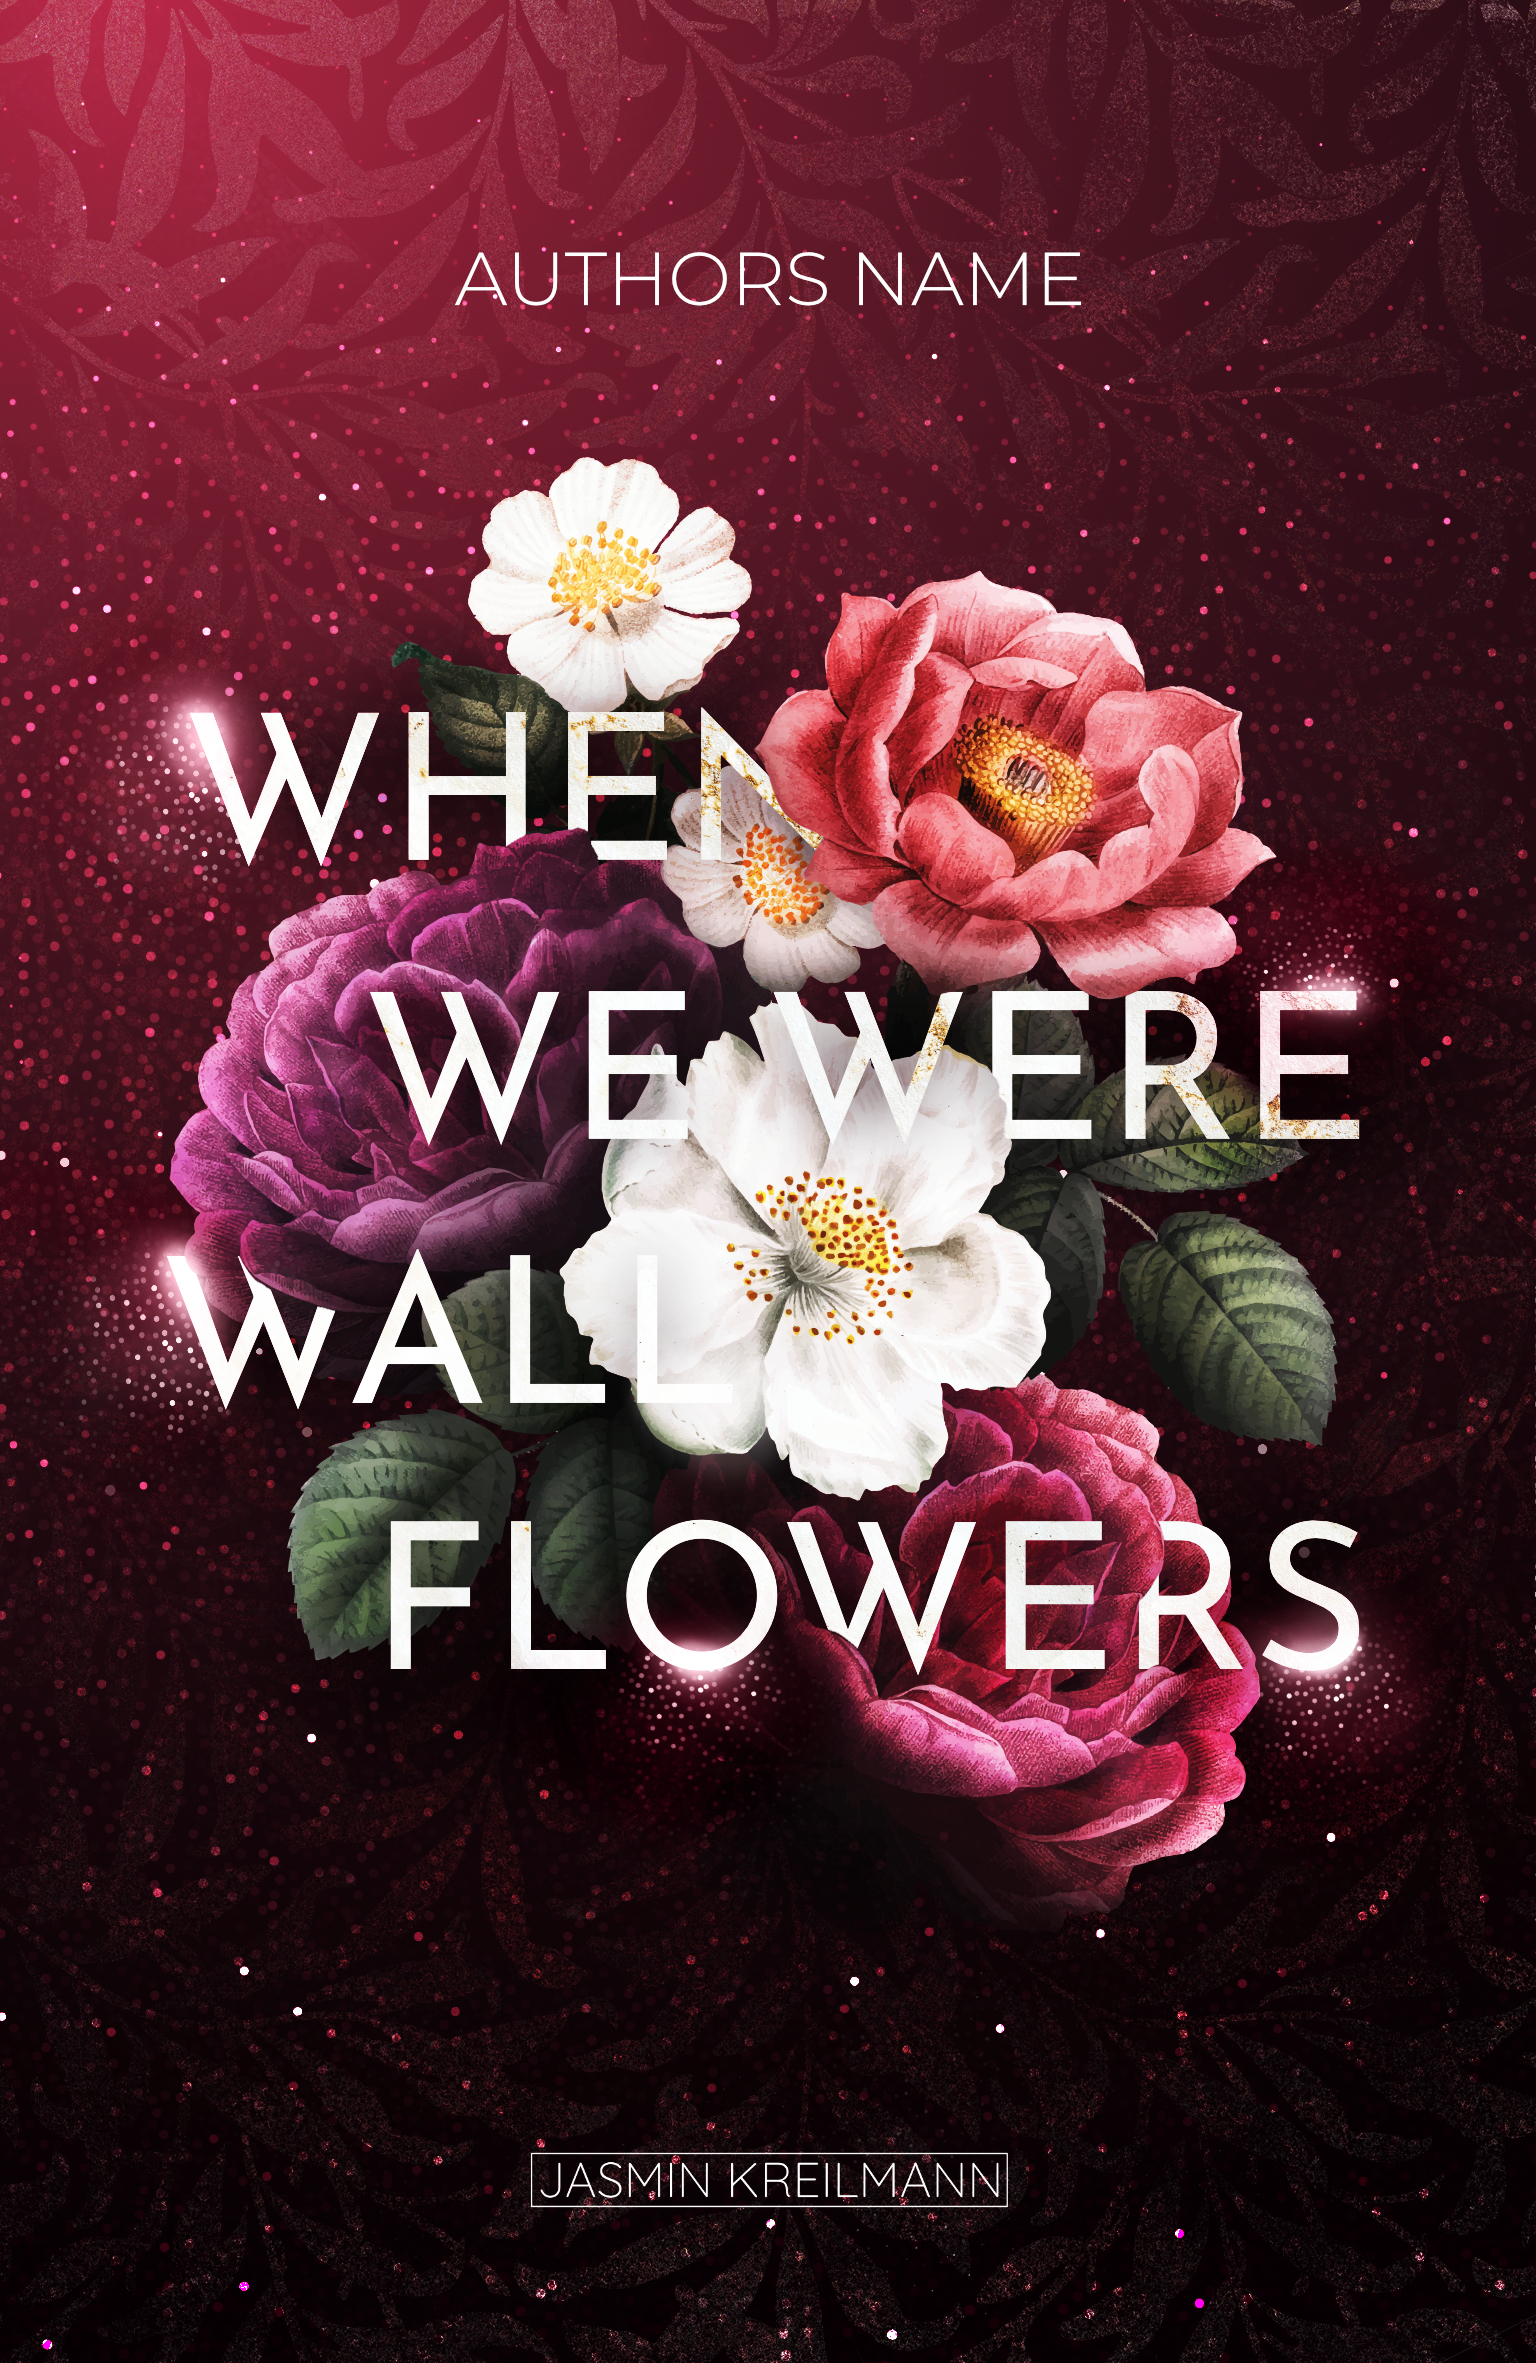 Premade_WhenwewereWallflowers